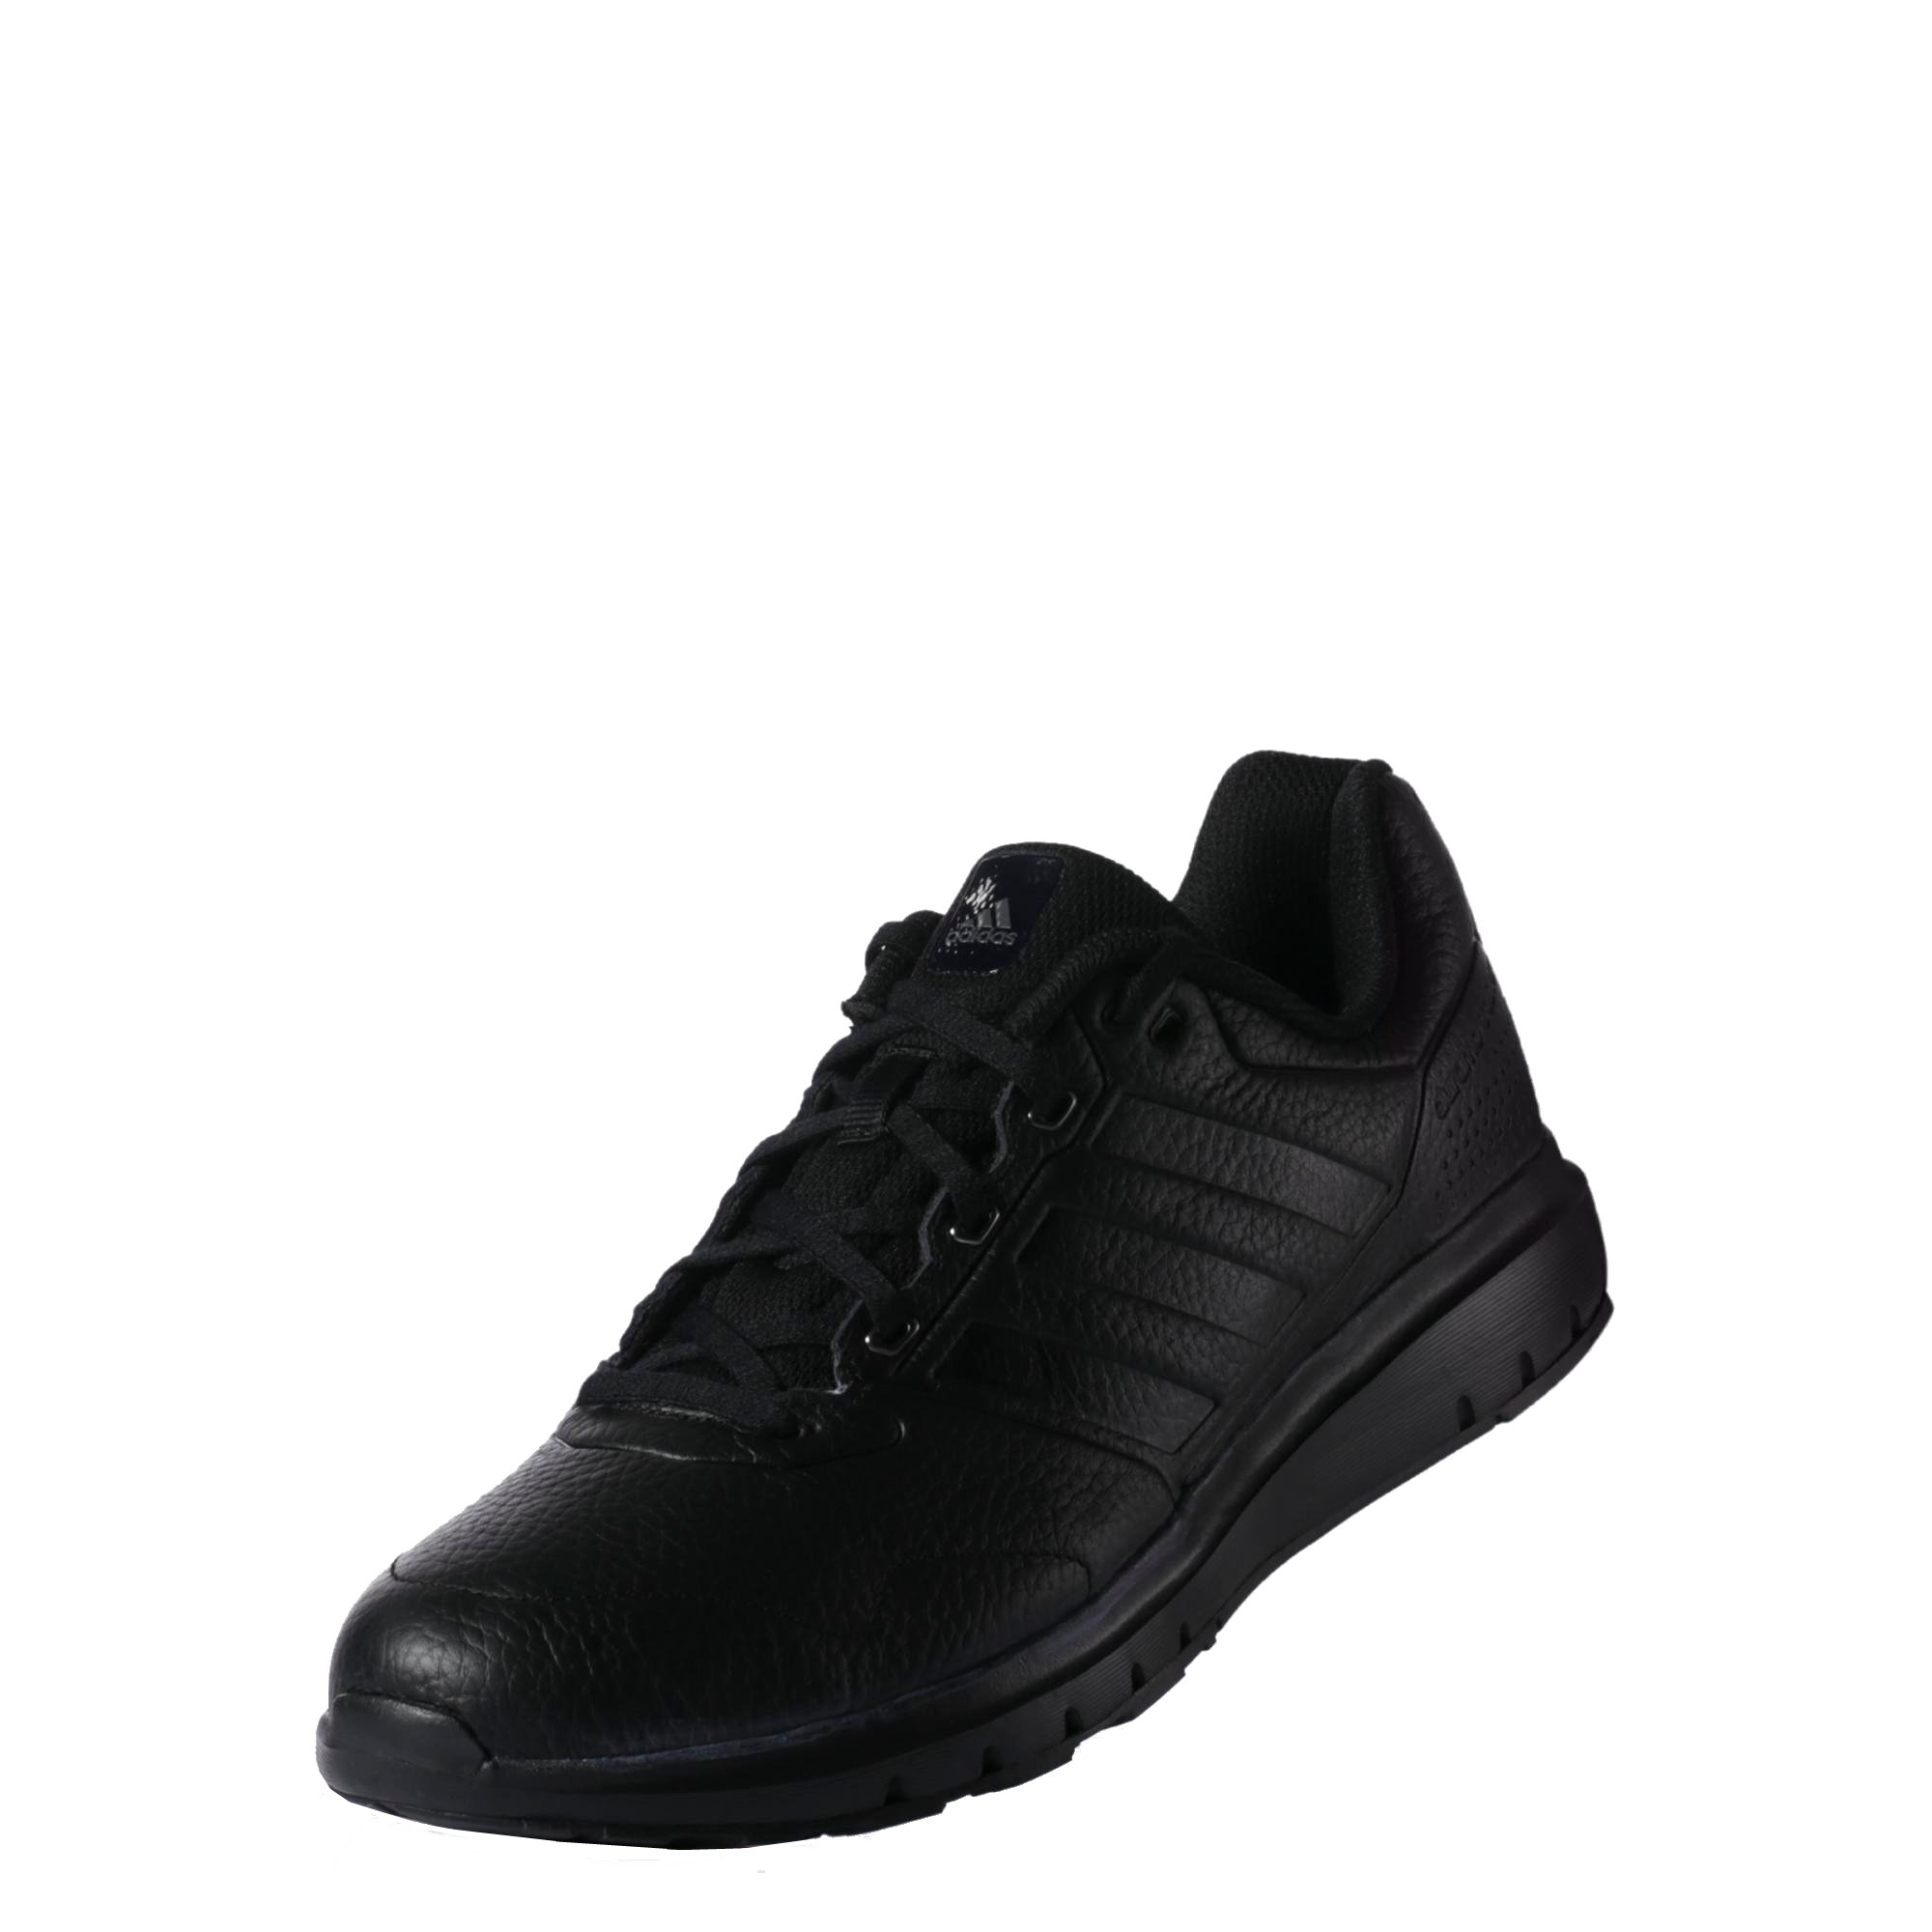 Adidas Trainer Leather (negro)